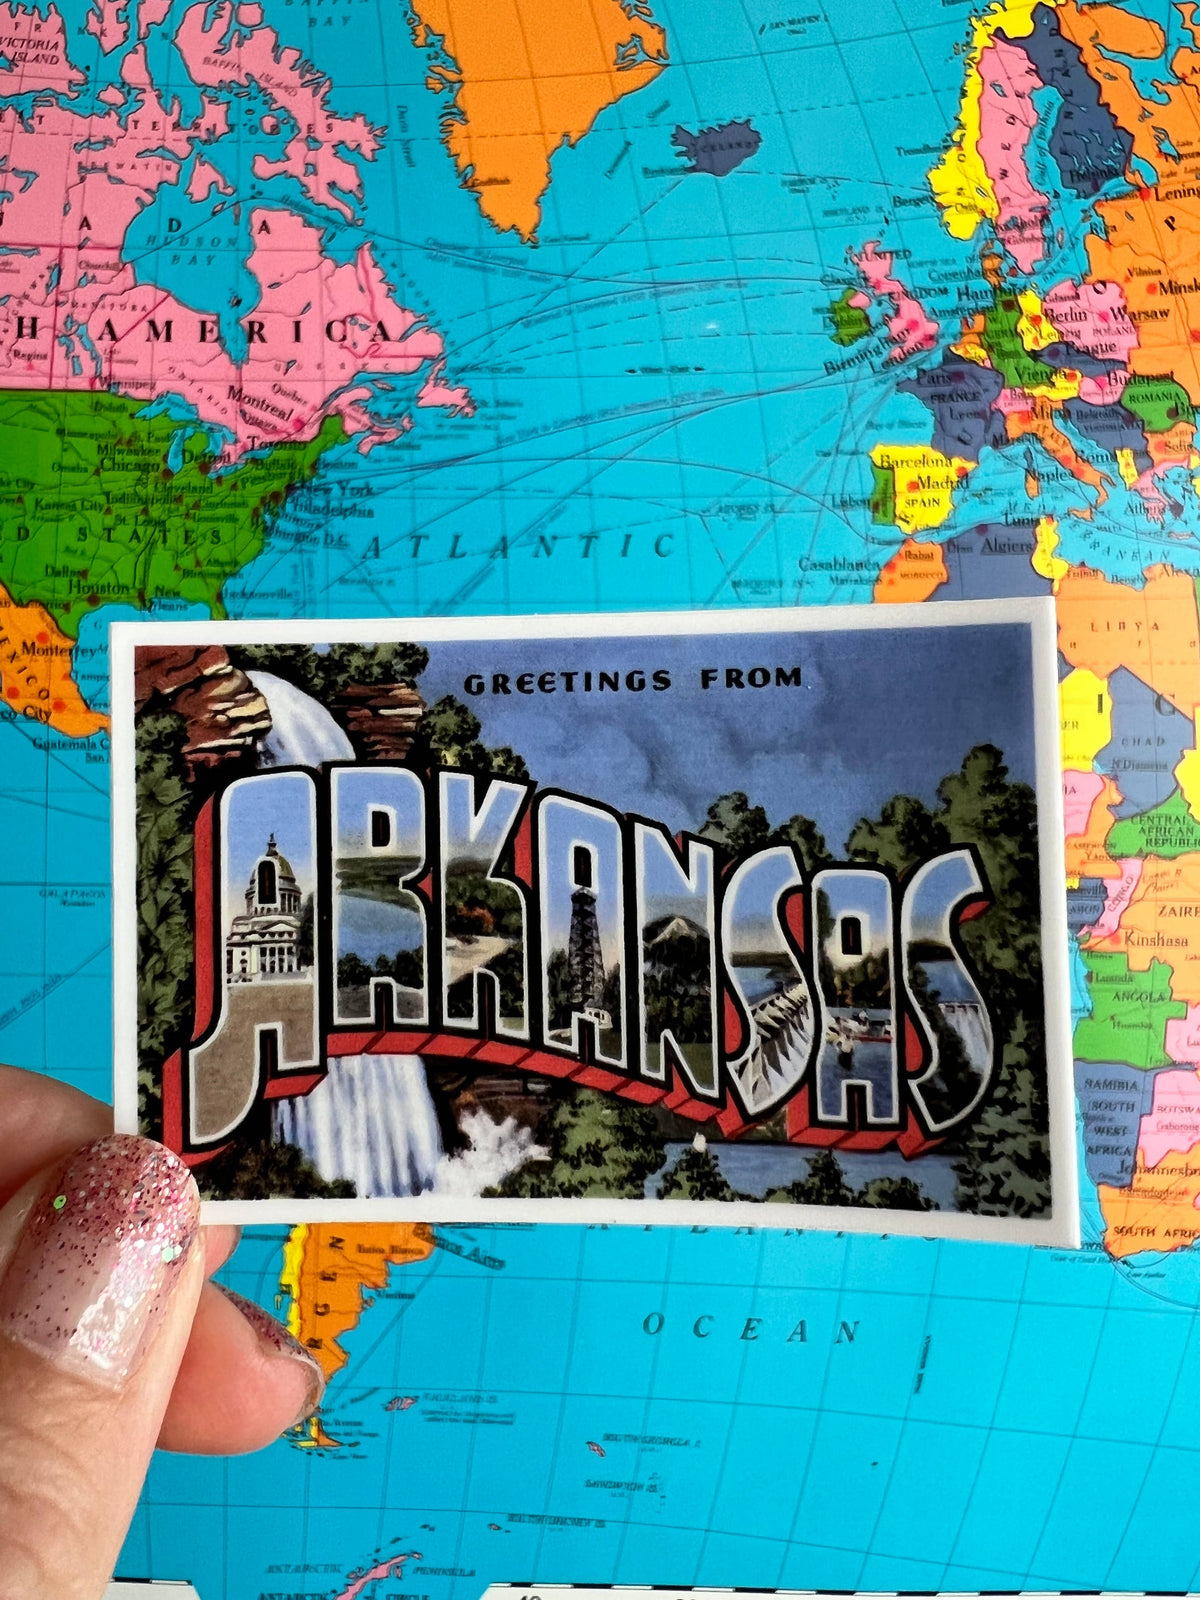 Arkansas Postcard Laptop Sticker Water Bottle Decal